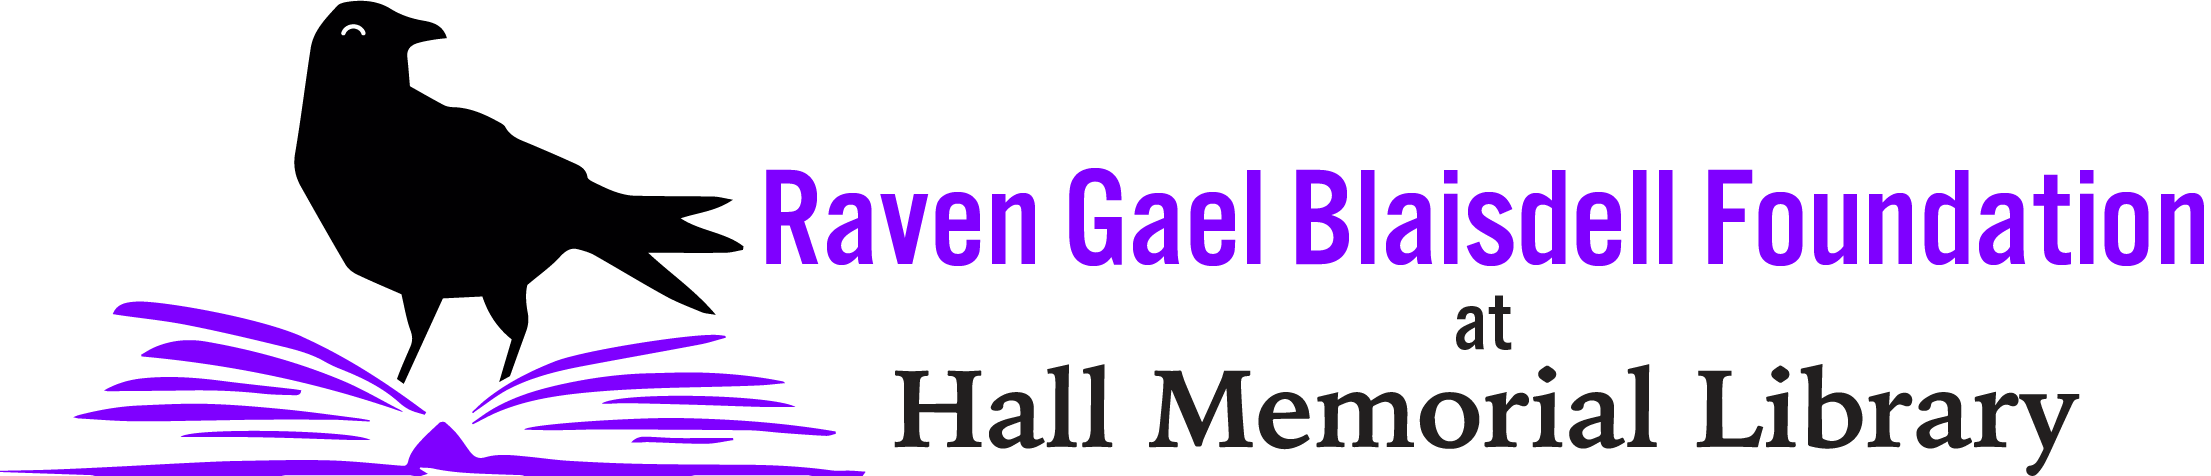 Raven Gael Blaisdell foundation logo